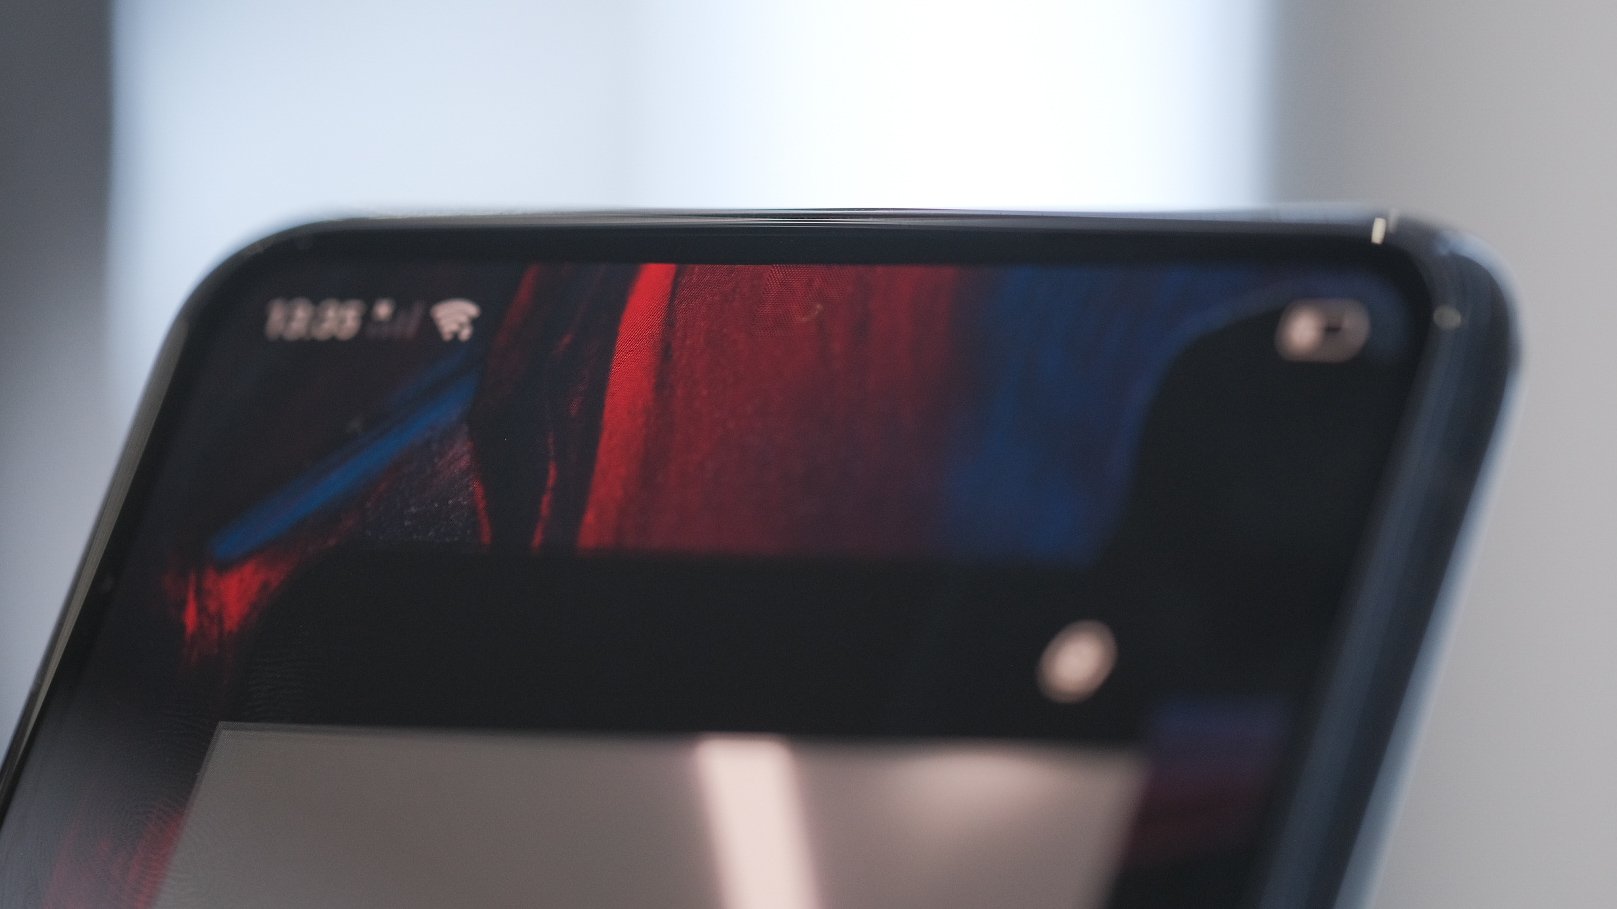 OPPO's under-display camera